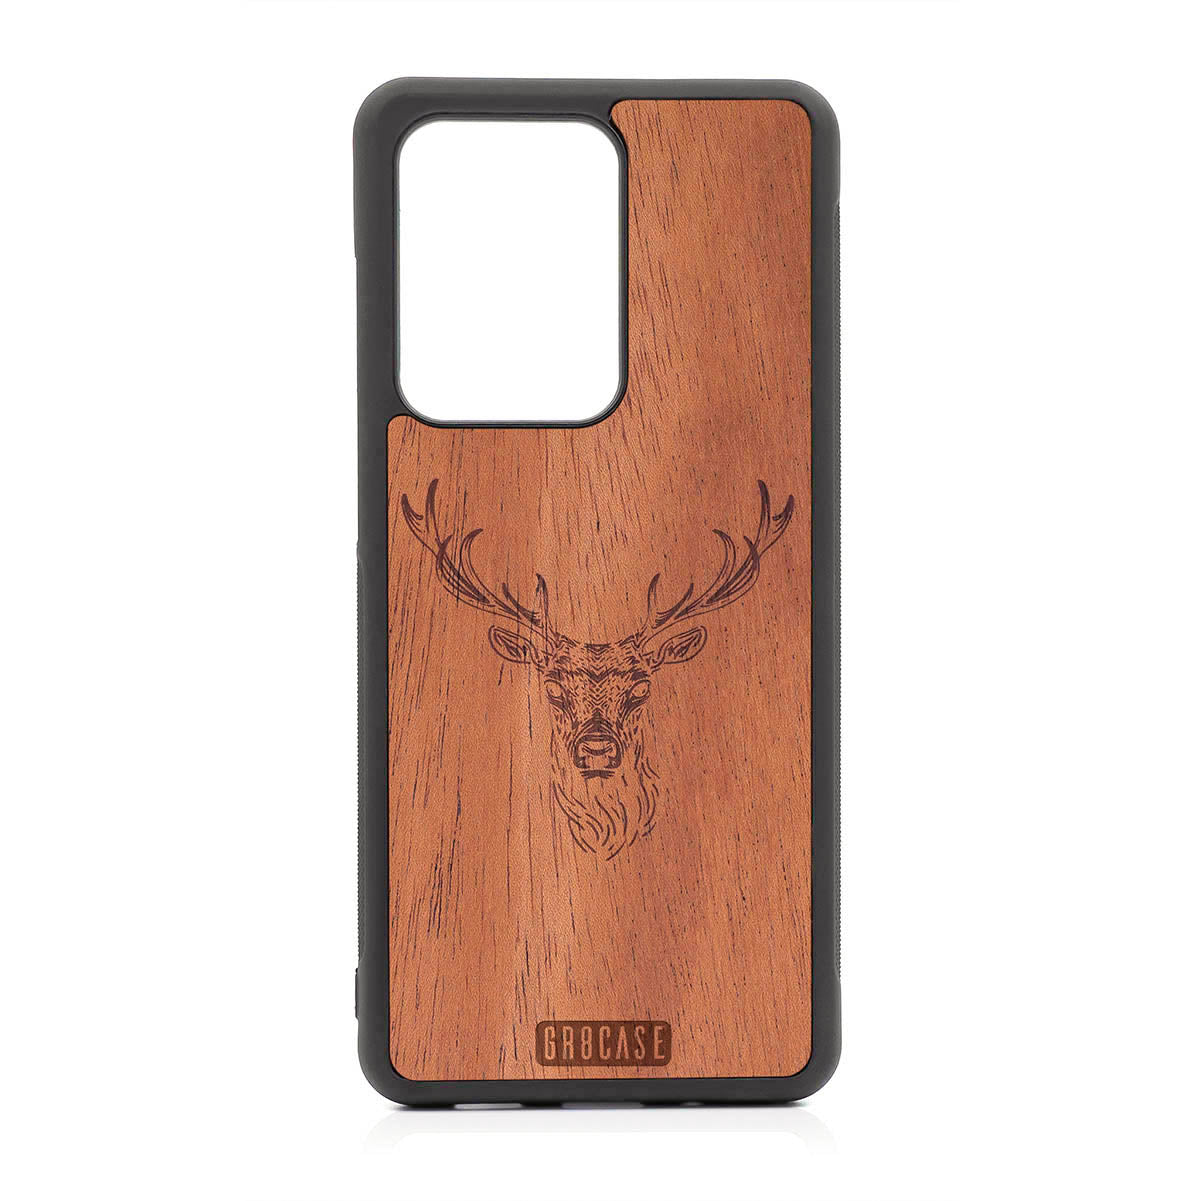 Elk Buck Design Wood Case For Samsung Galaxy S20 Ultra by GR8CASE